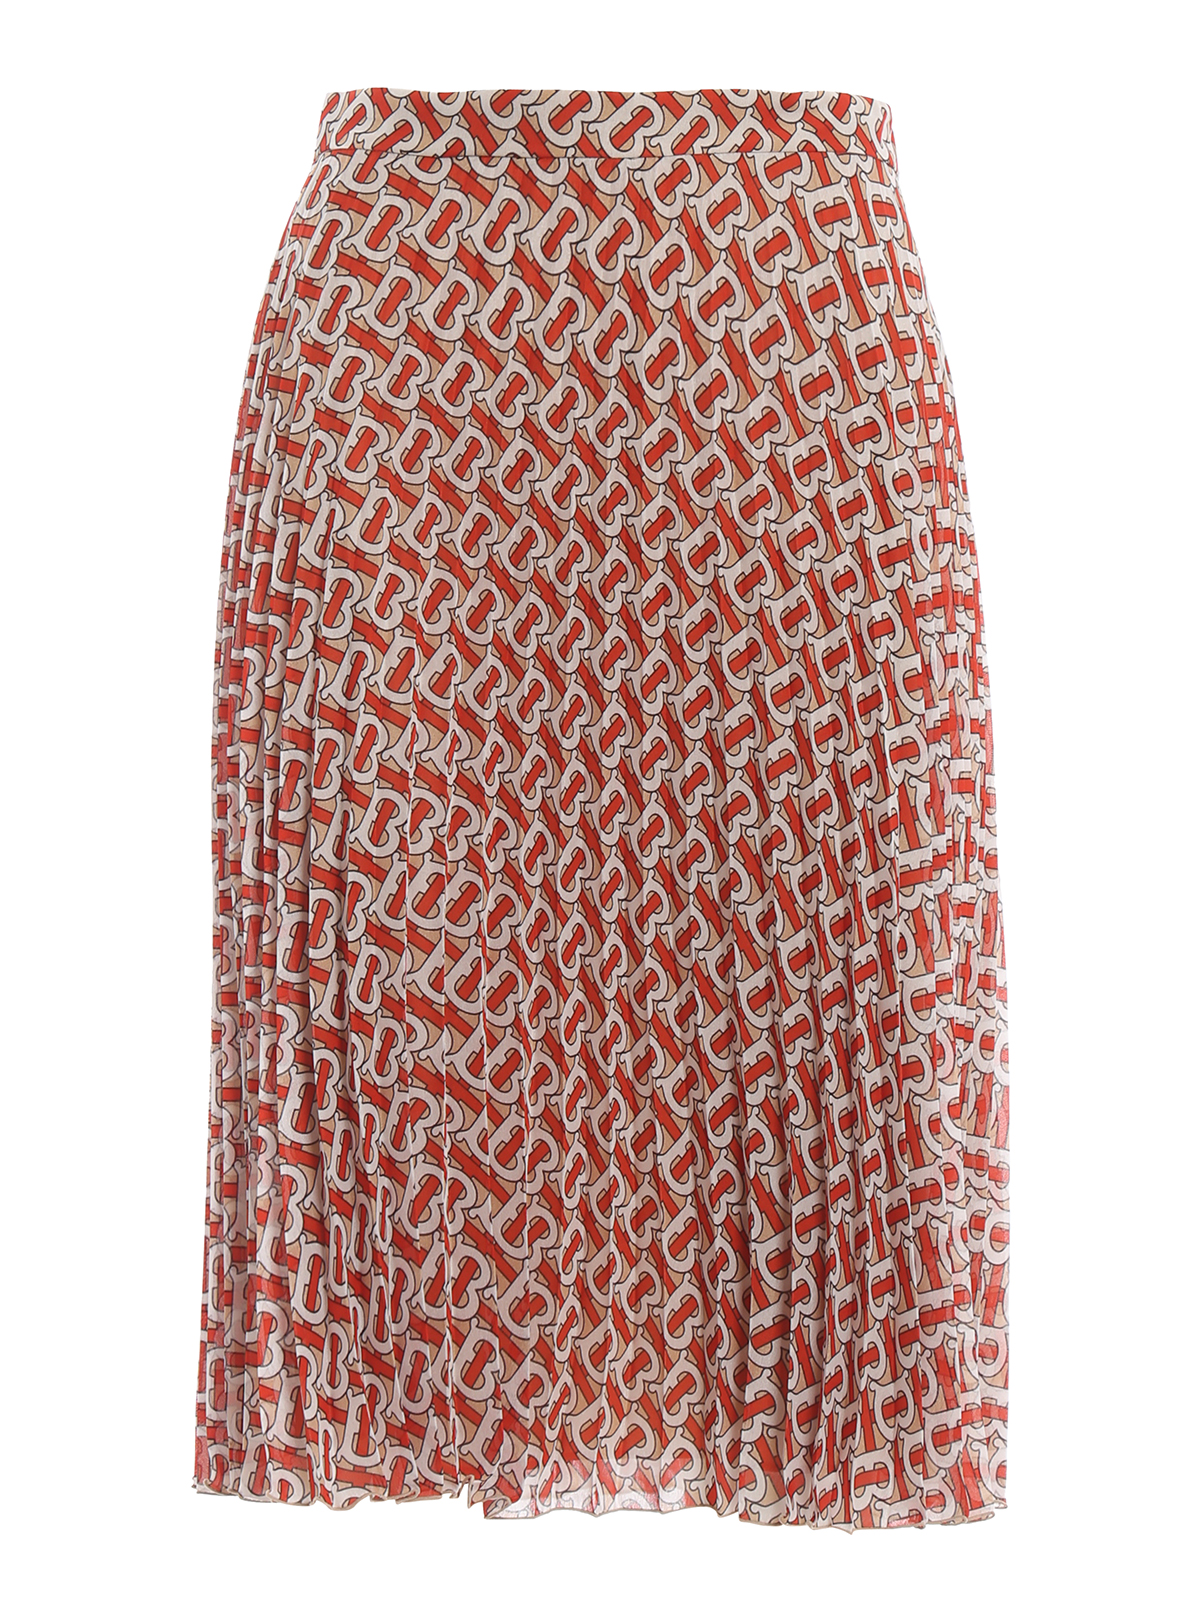 burberry print skirt